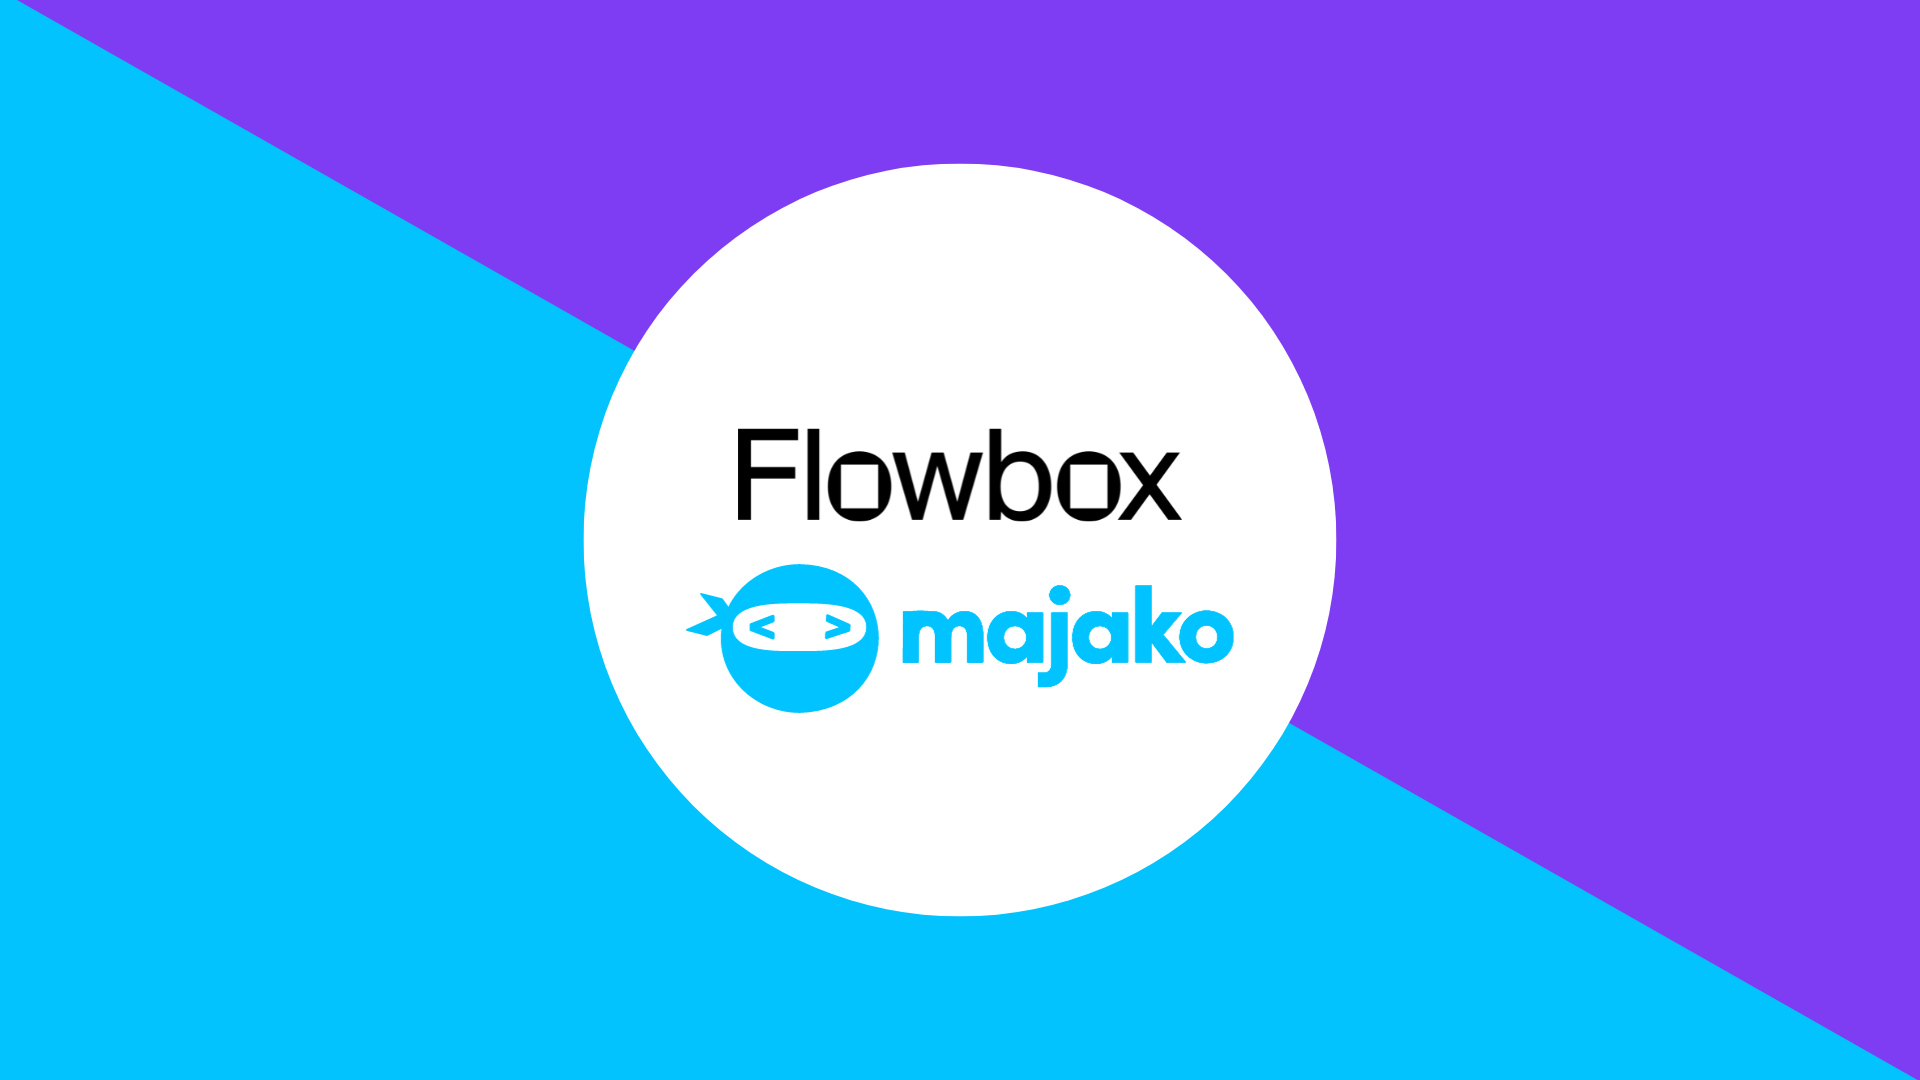 UGC Platform Flowbox partners with Majako